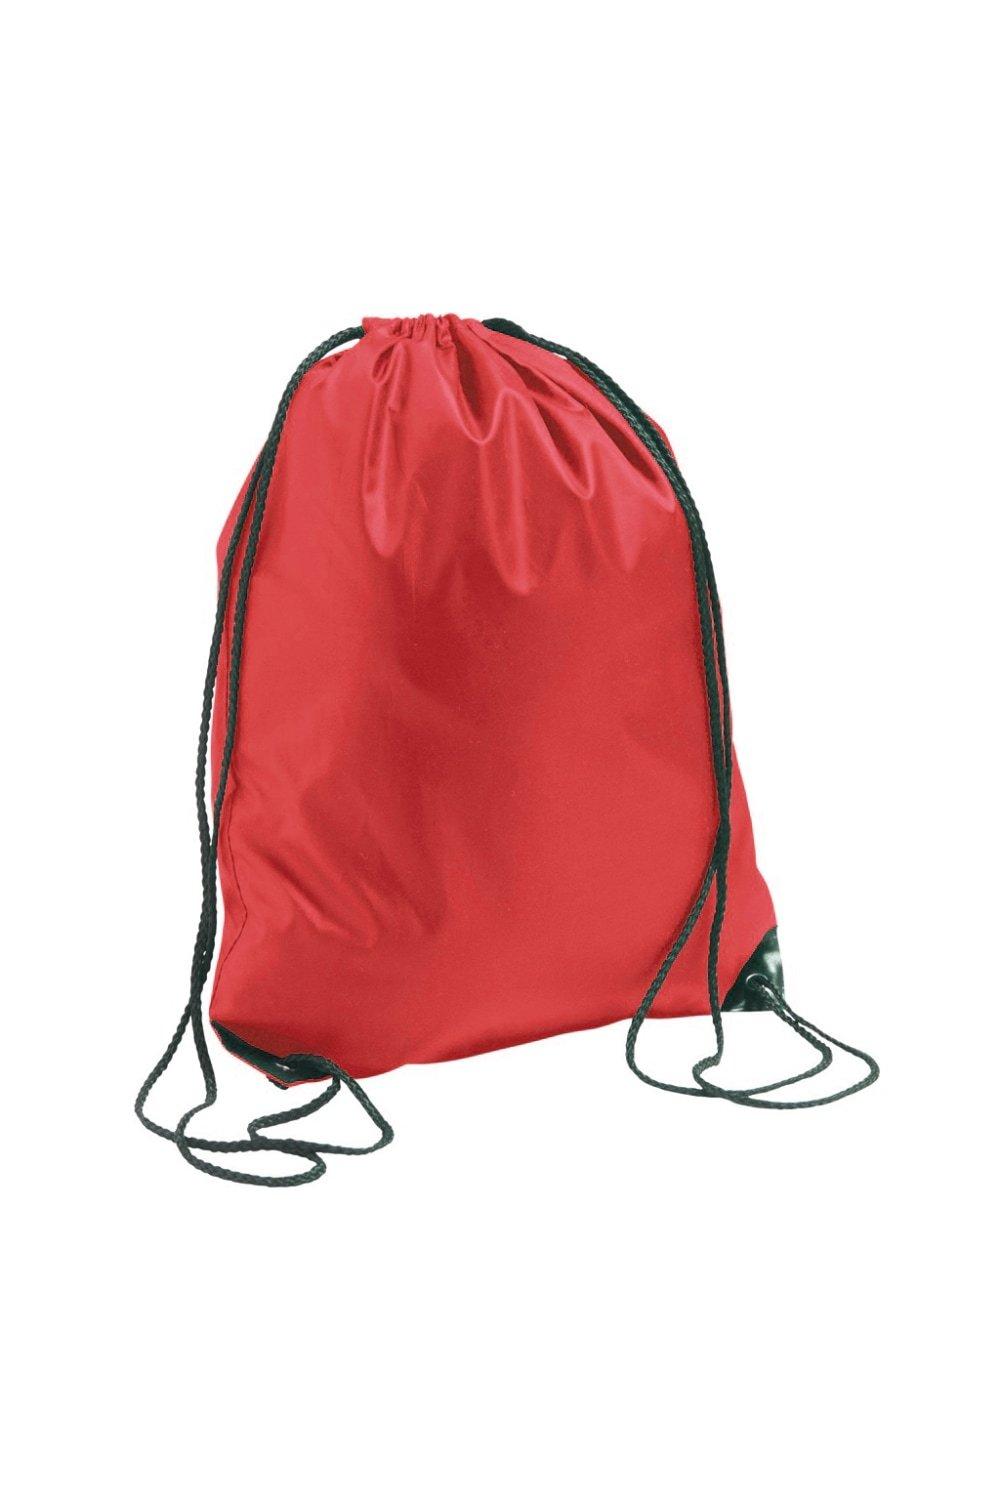 Сумка Urban Gymsac на шнурке SOL'S, красный сумка urban gymsac на шнурке sol s фиолетовый